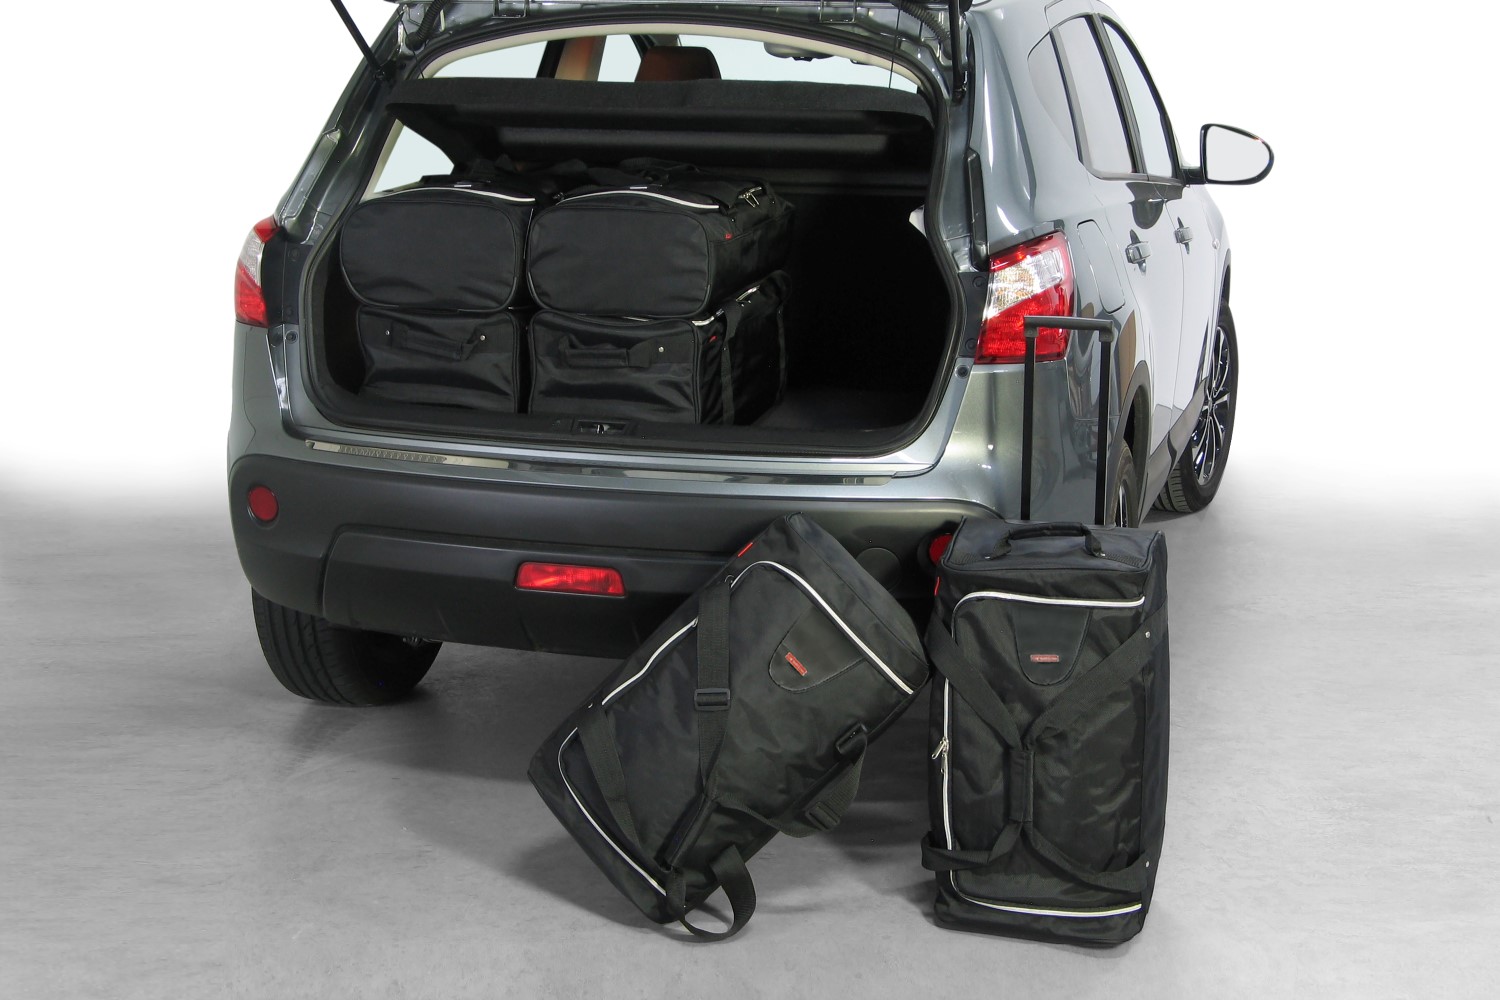 https://www.car-bags.com/images/stories/virtuemart/product/n10101s-nissan-qashqai-07-14-car-bags-1.jpg